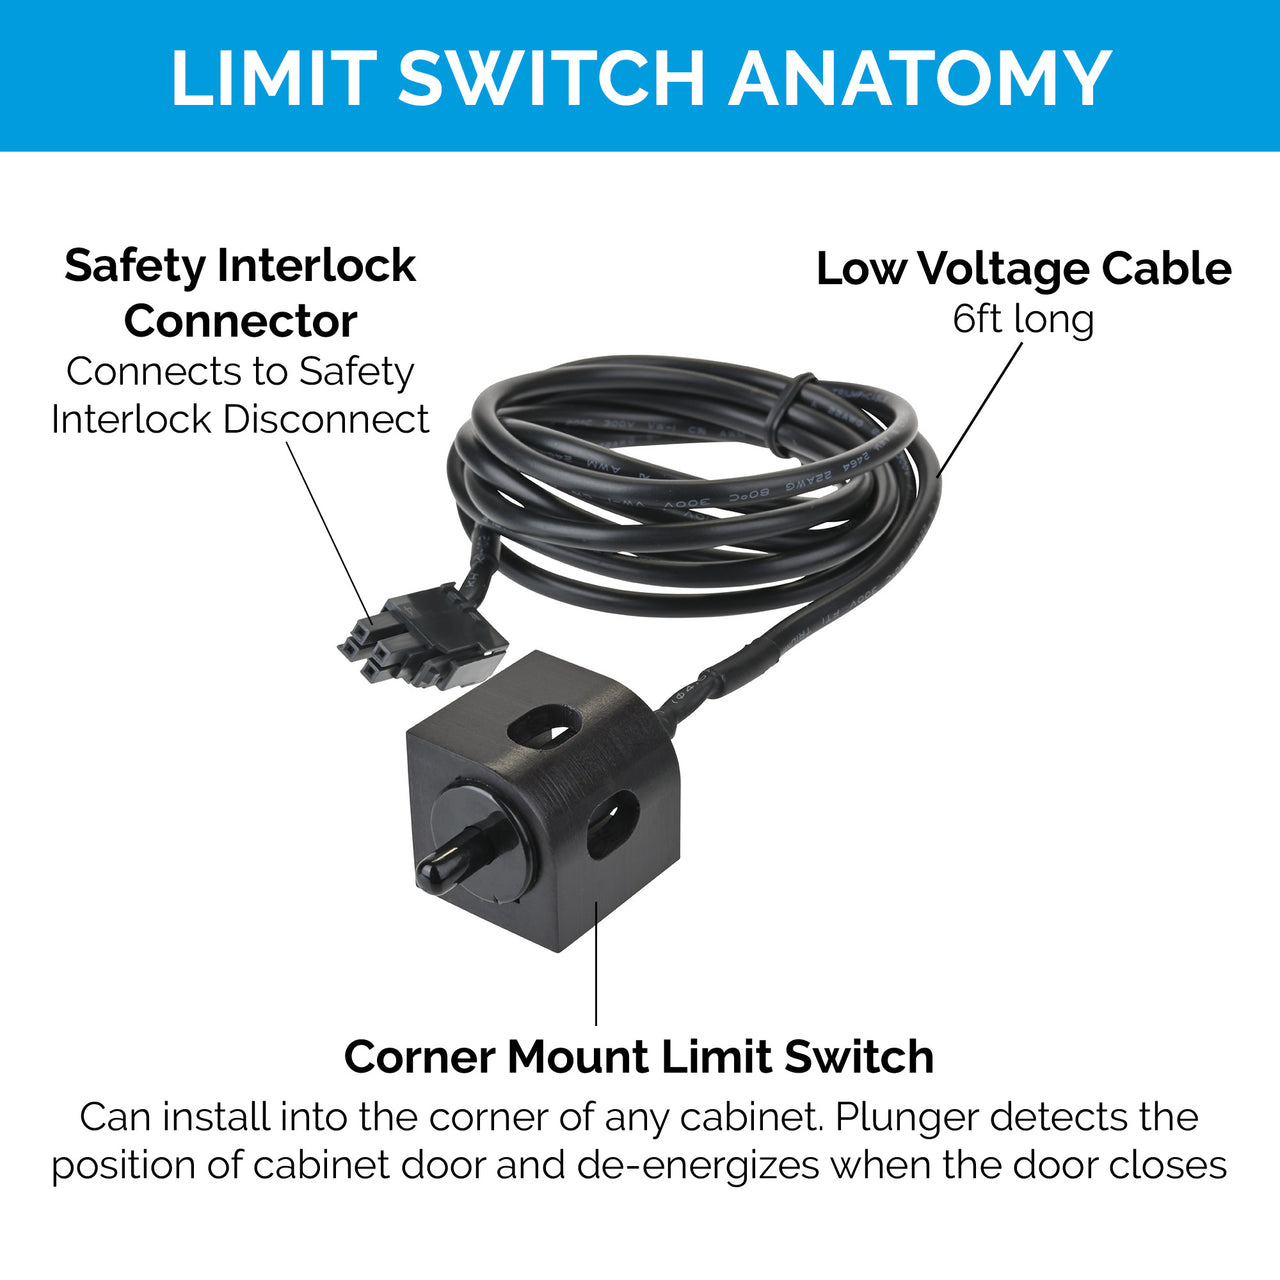 Safety Interlock Disconnect with Corner Mount Limit Switch